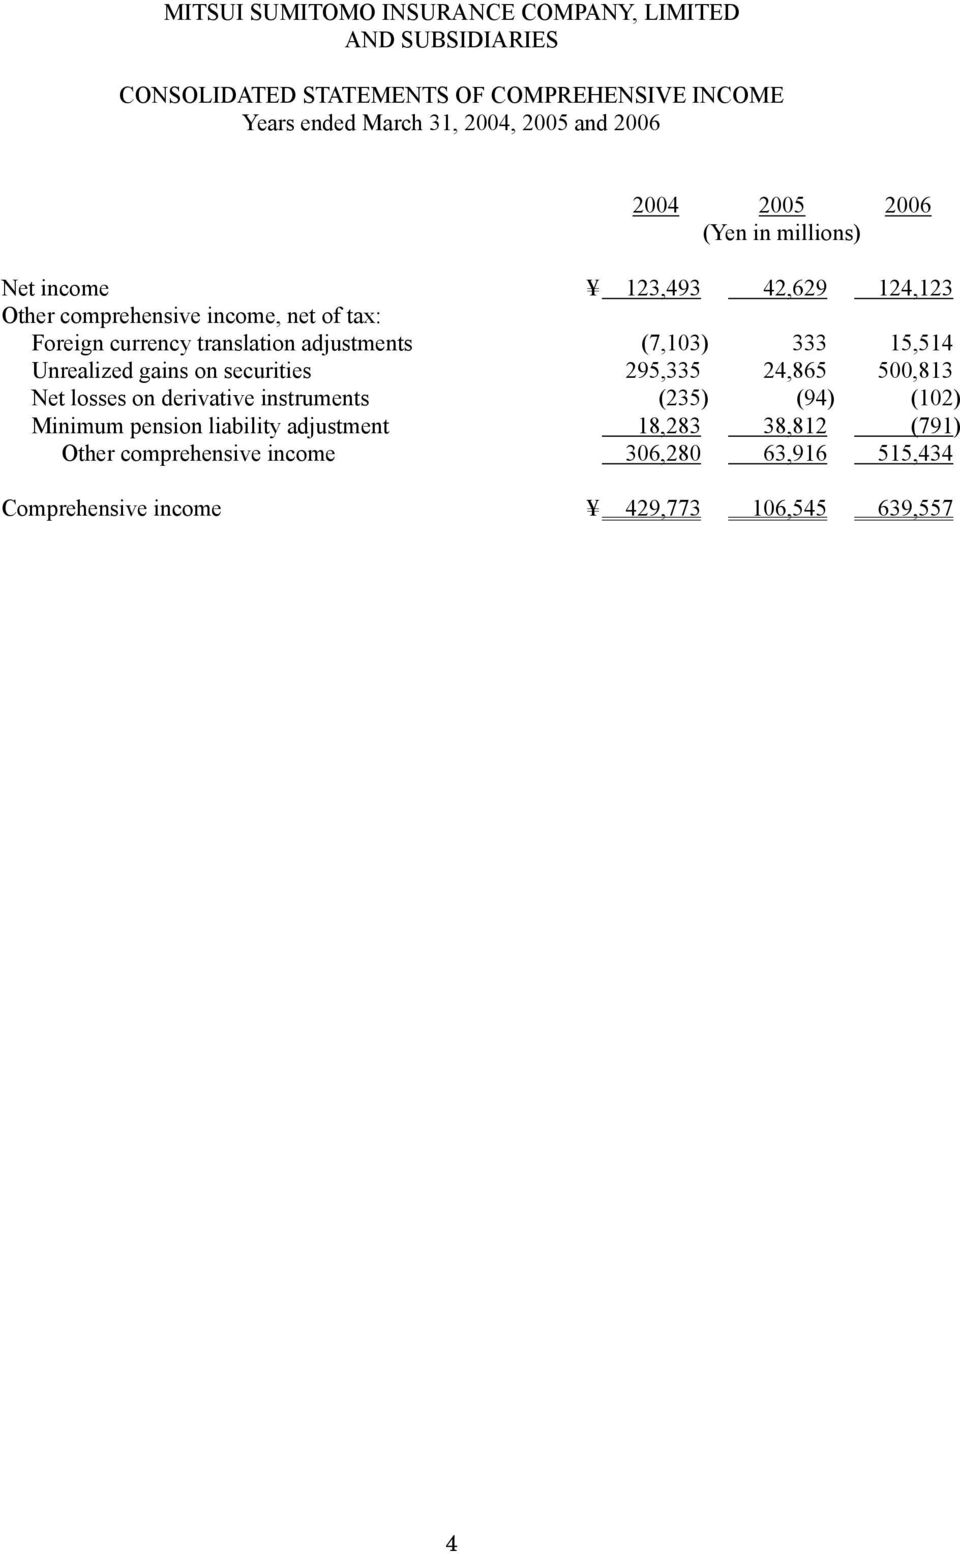 24,865 500,813 Net losses on derivative instruments (235) (94) (102) Minimum pension liability adjustment